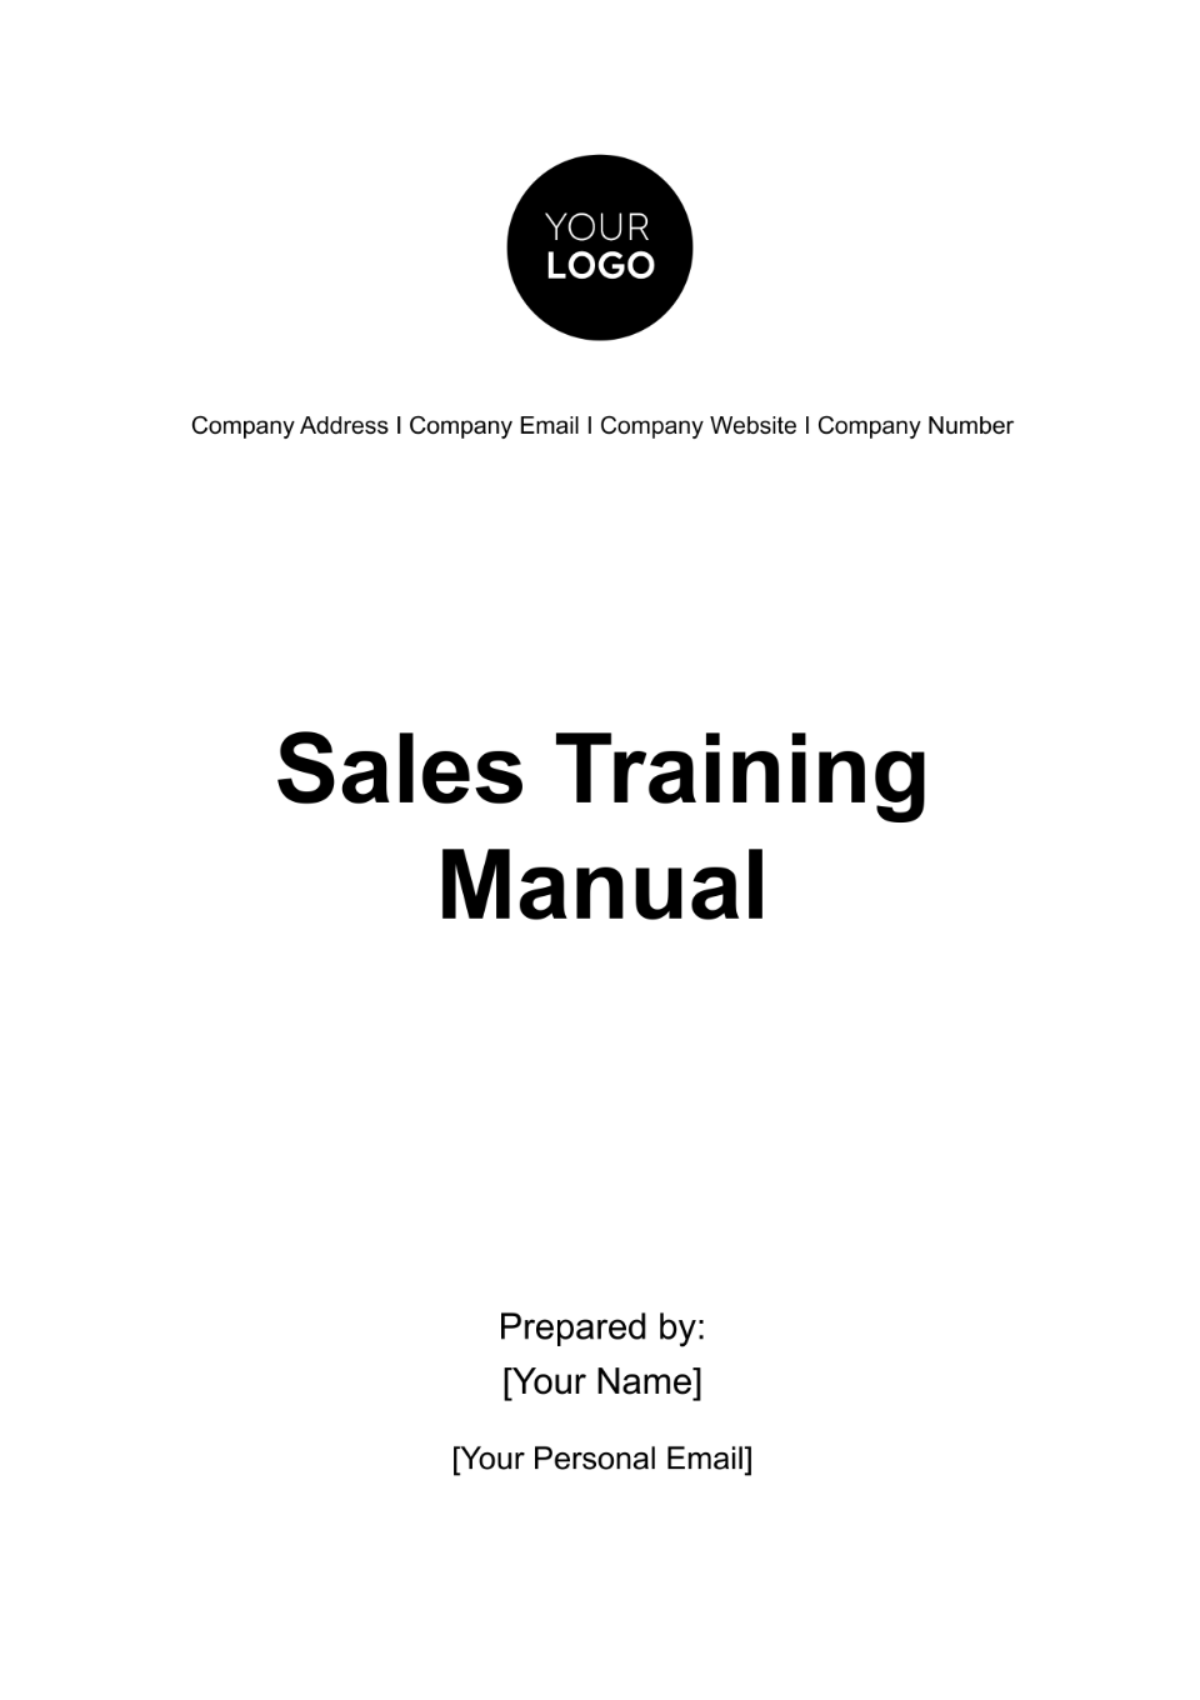 Sales Training Manual Template